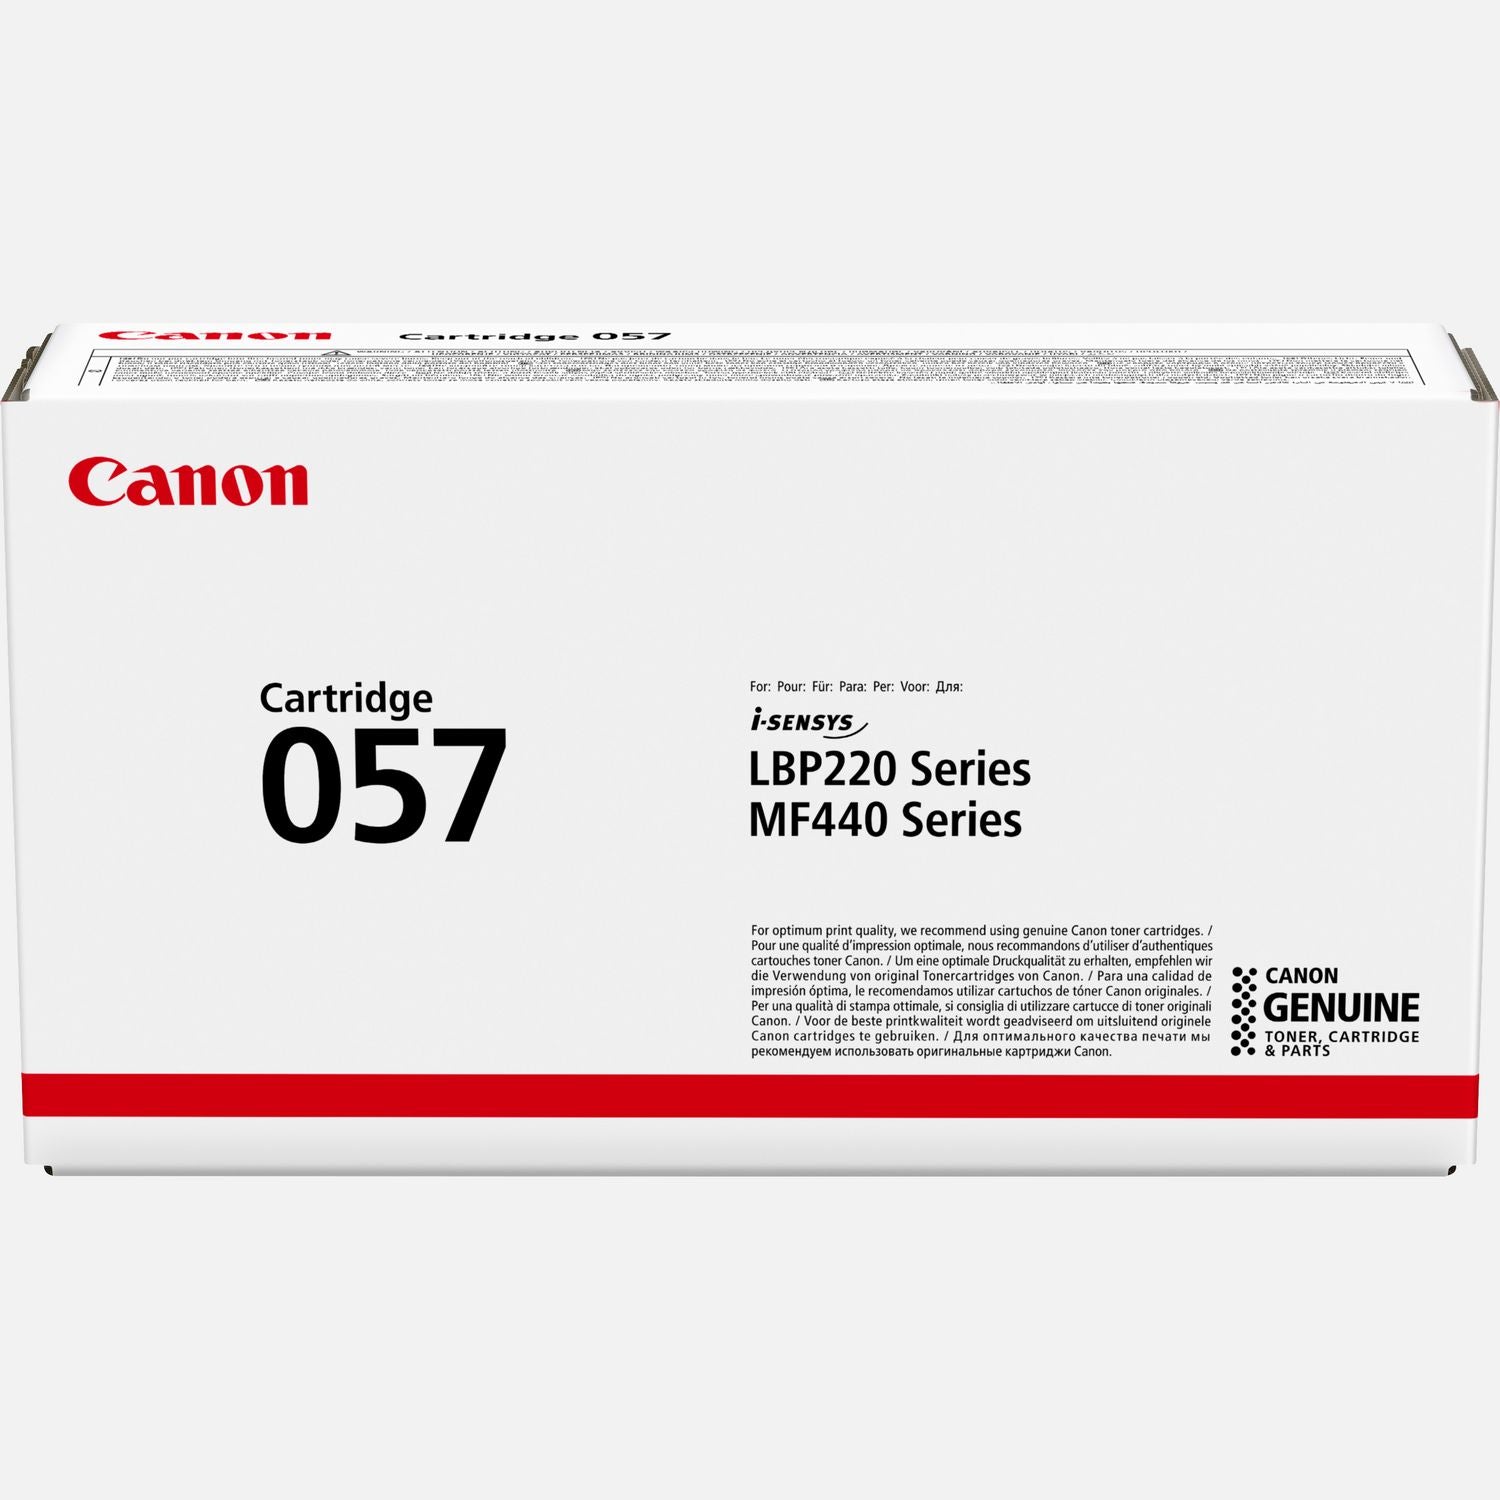 Canon i-SENSYS 057 Toner Cartridge, Black for LBP LBP223, LBP226 MF443 M445